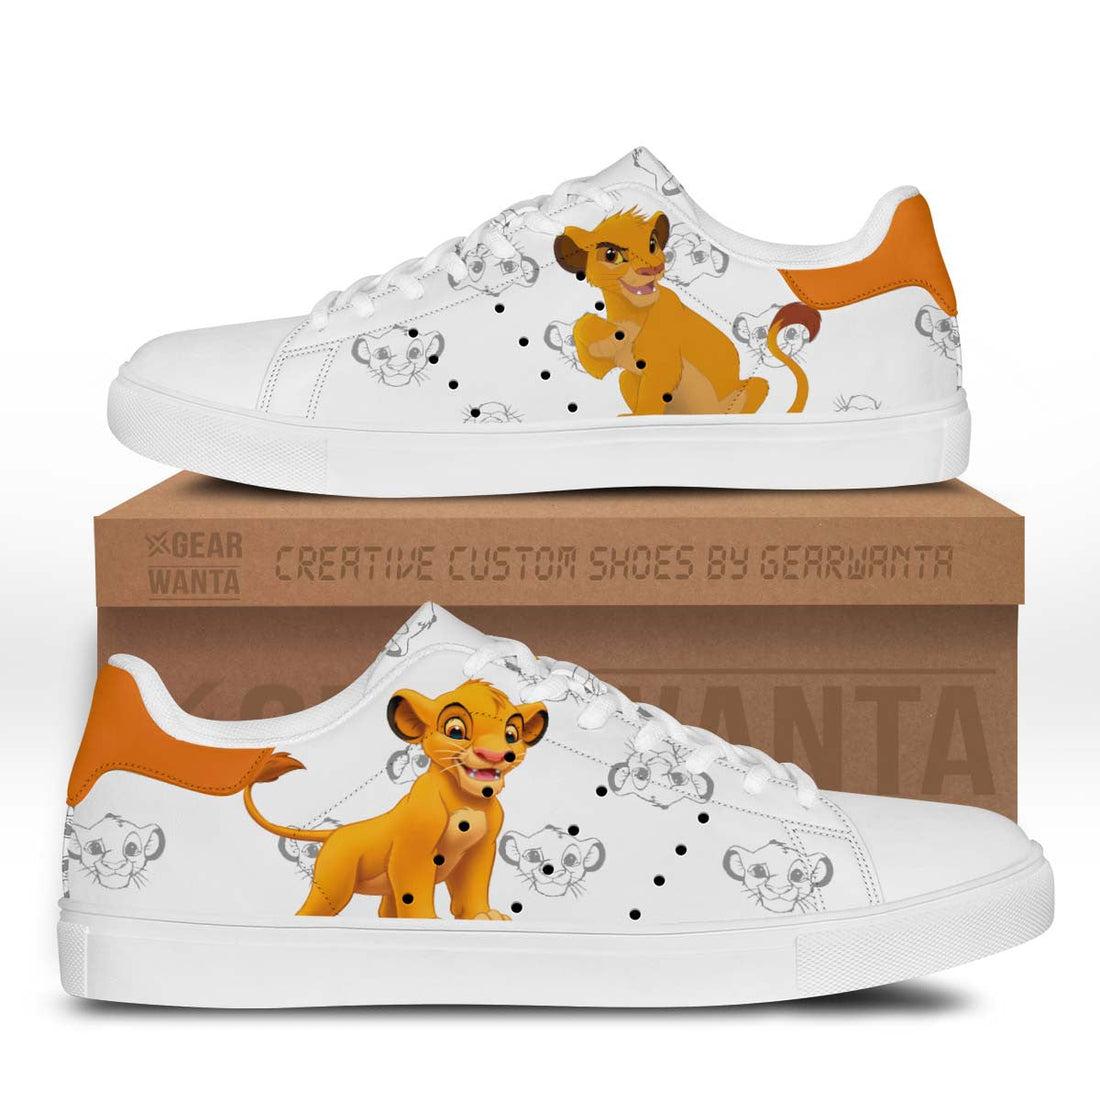 Simba Stan Shoes Custom The Lion King Cartoon Cartoon Shoes-Gear Wanta